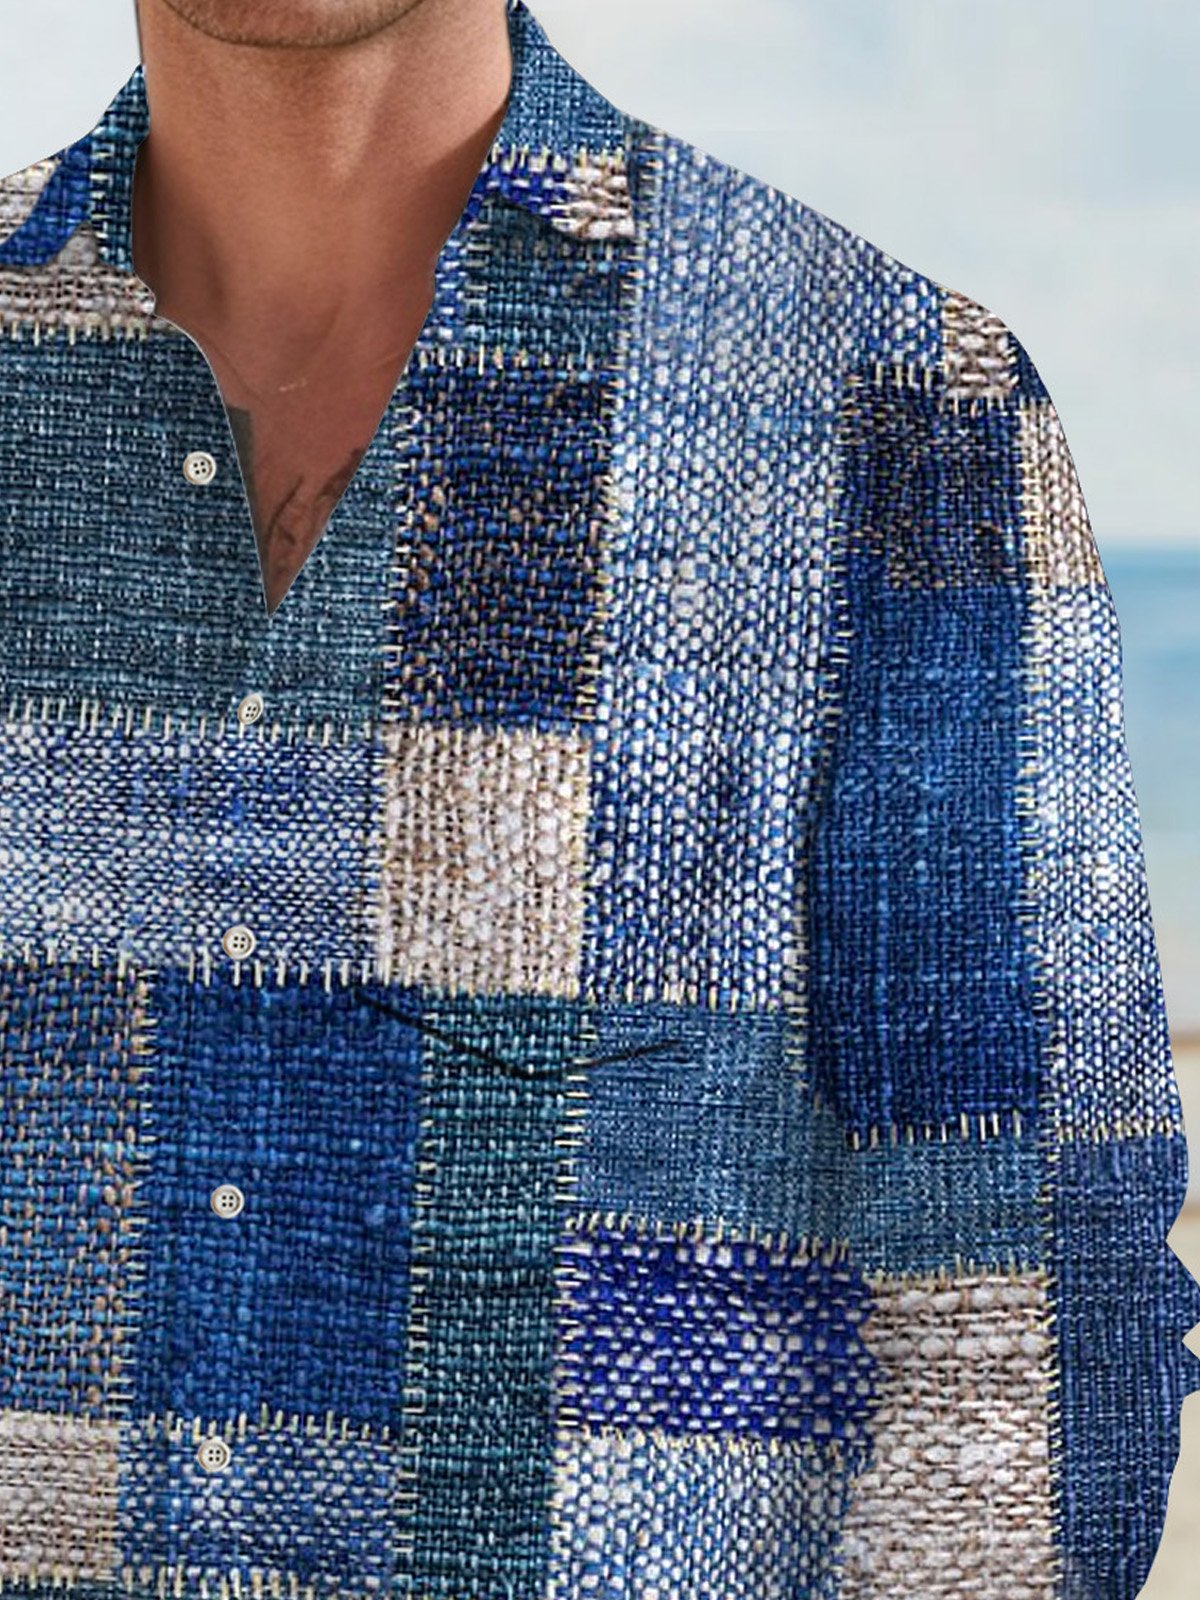 Royaura Men's Retro Geometric Textured Print Button Pocket Long Sleeve Shirt